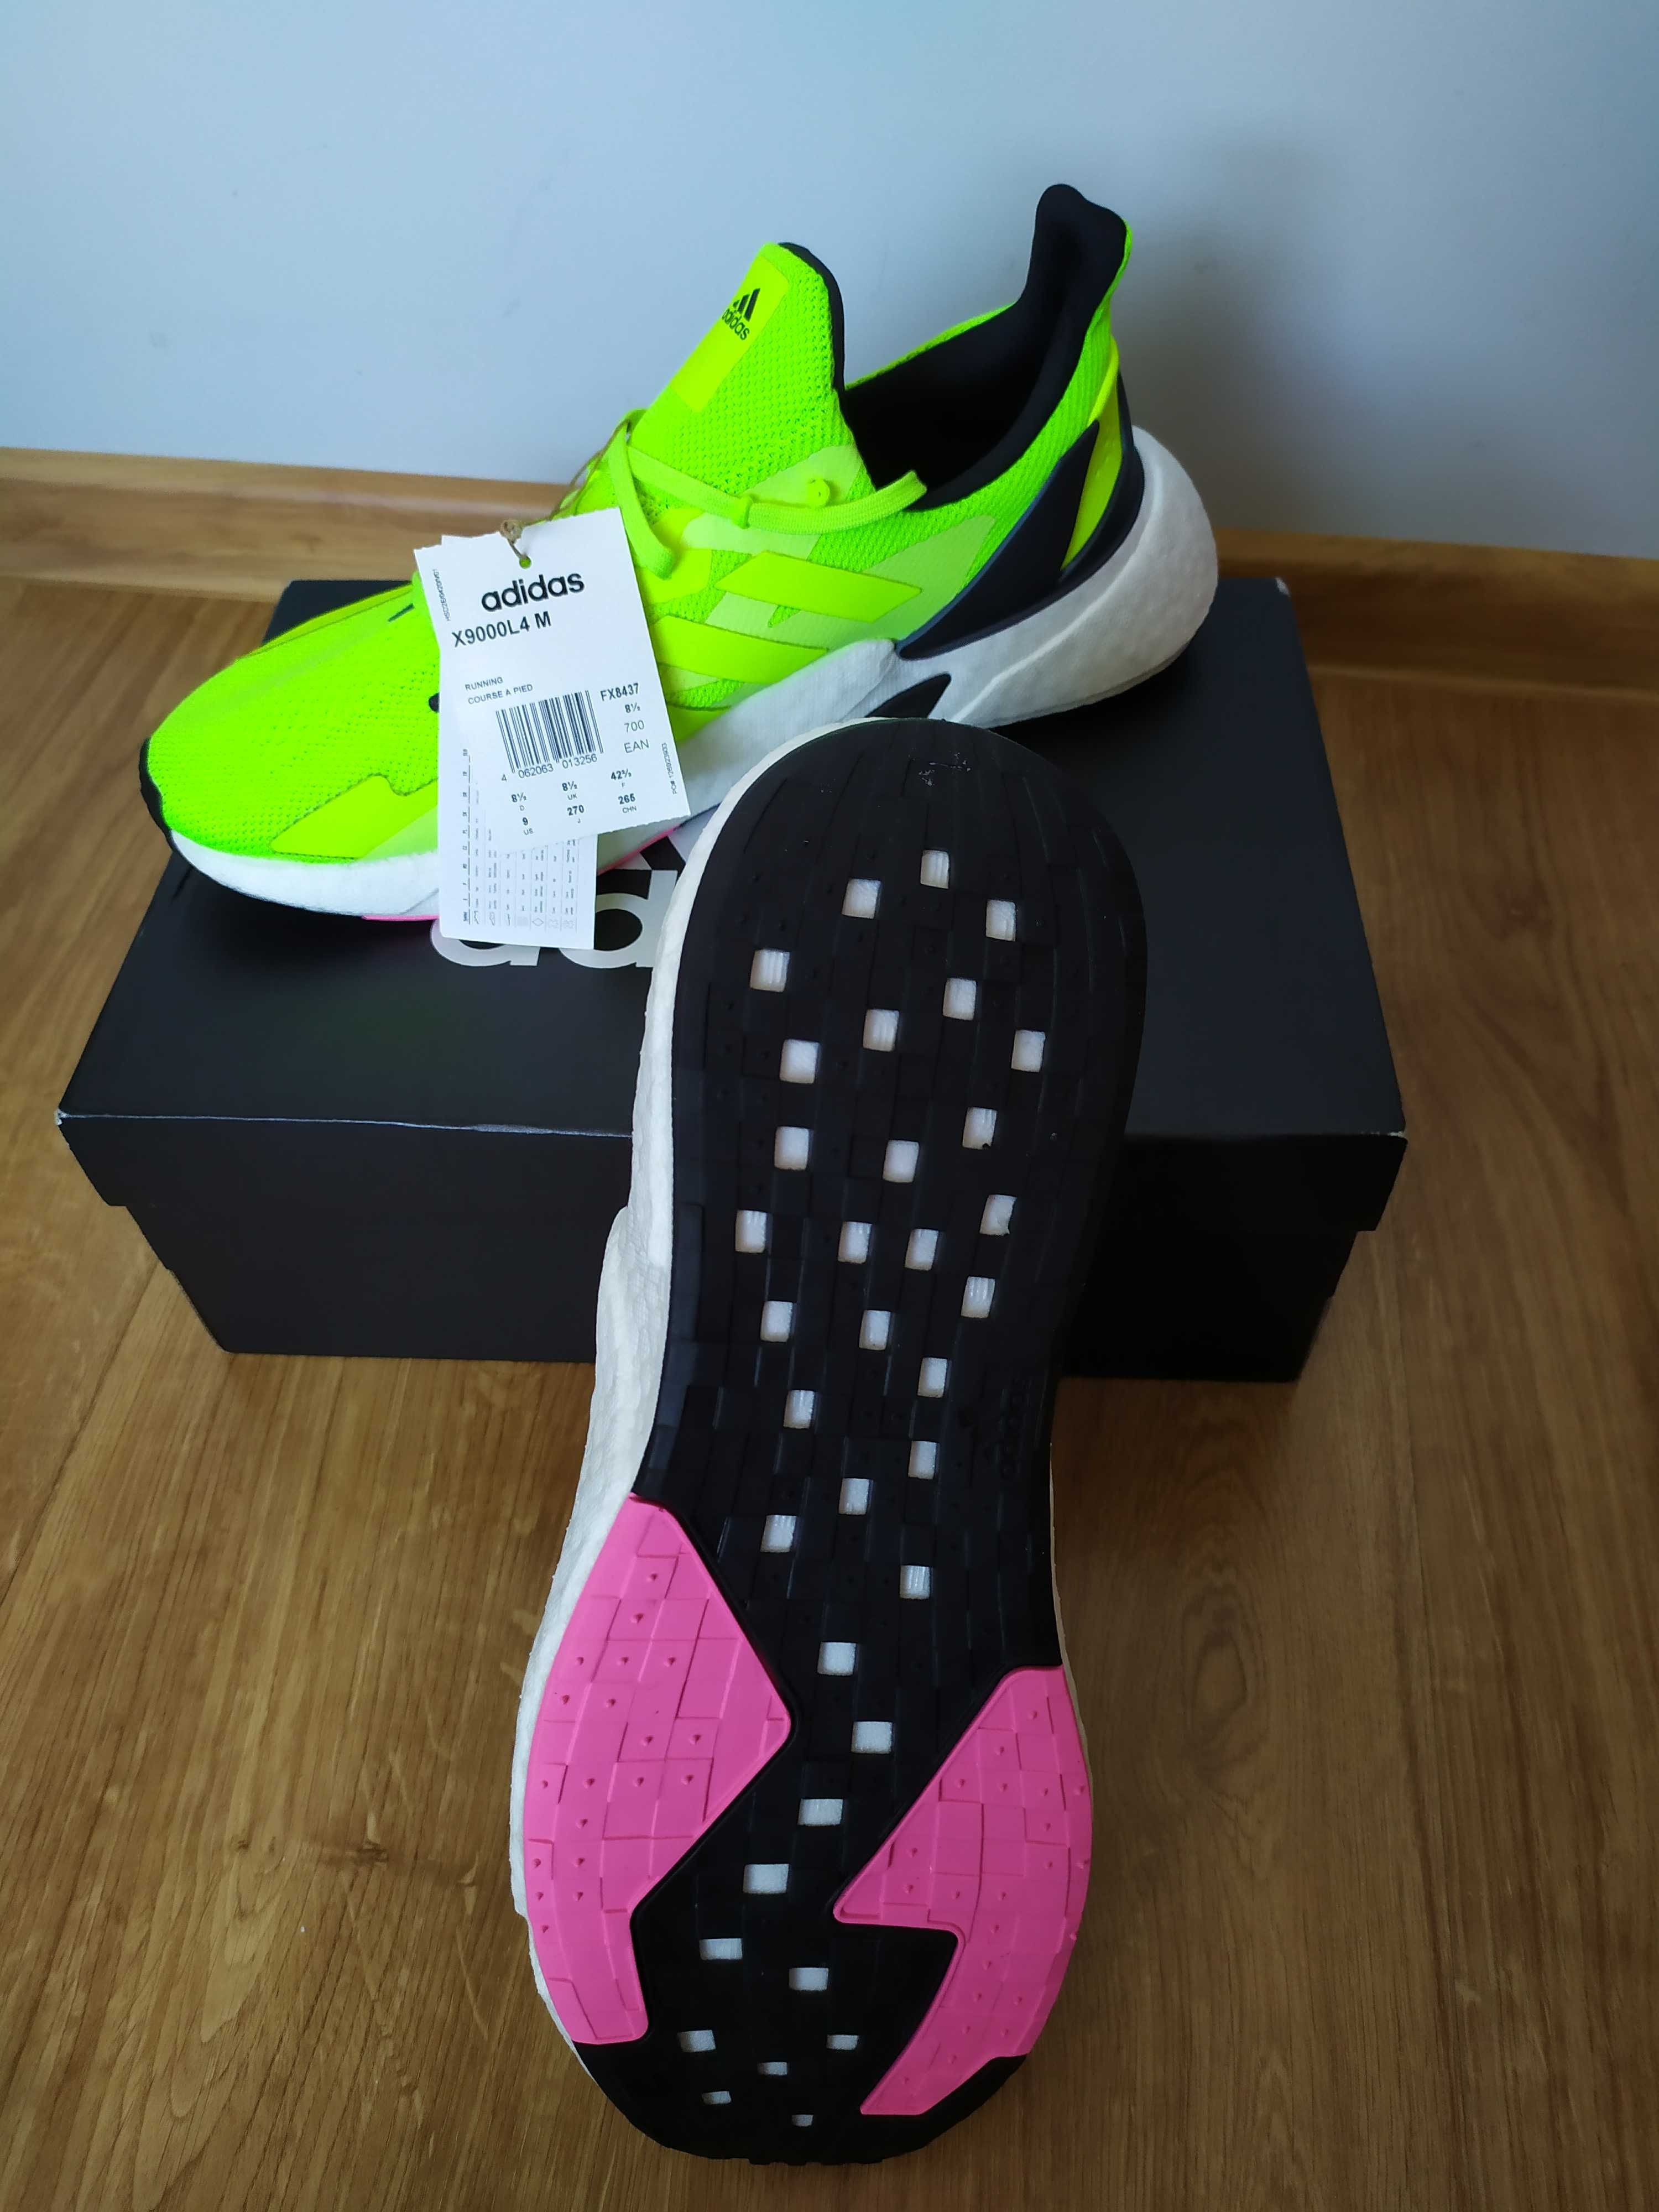 Nowe buty Adidas X9000L4 UNISEX